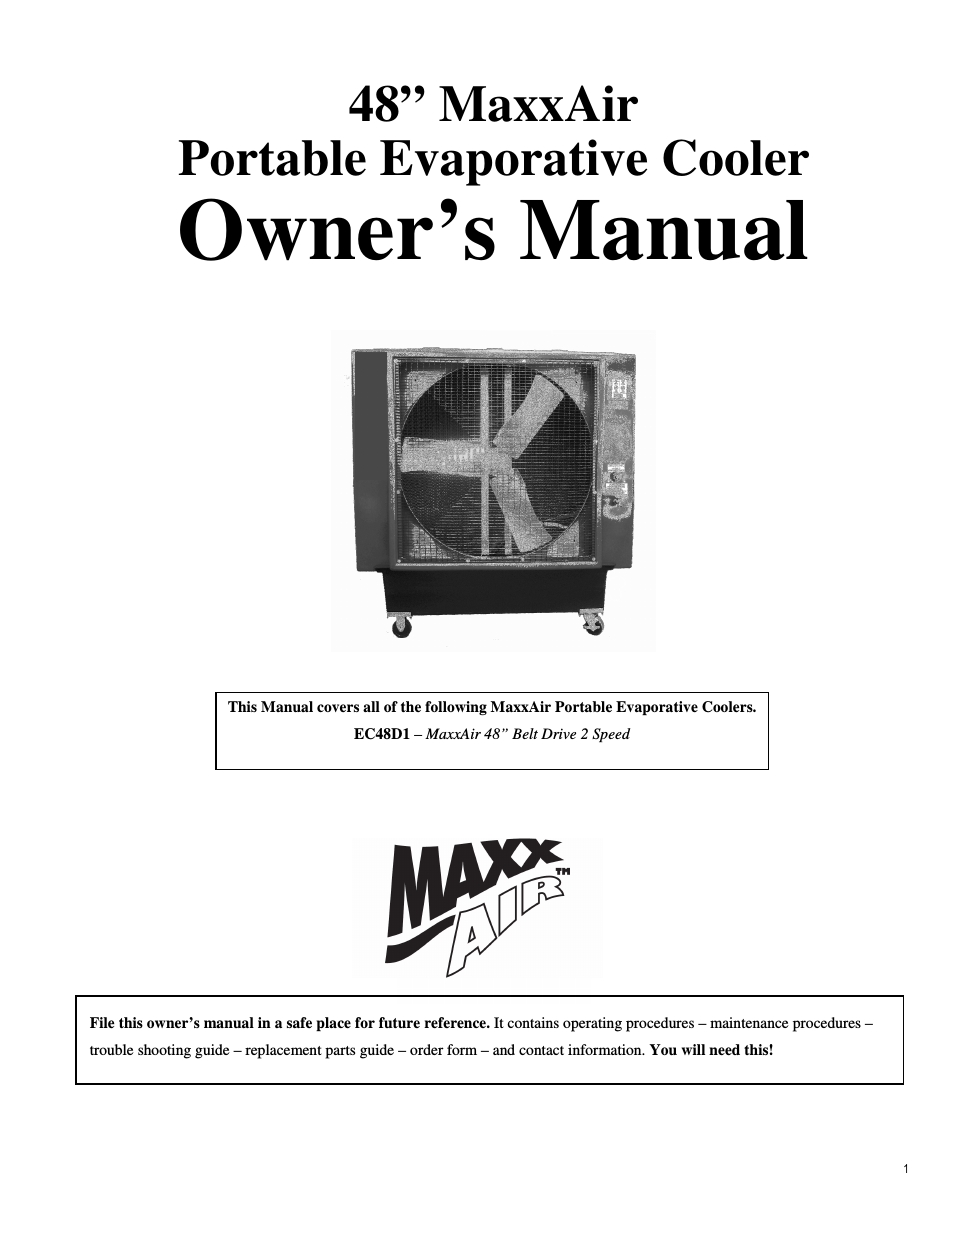 48” MaxxAir Portable Evaporative Cooler Owner’s Manual